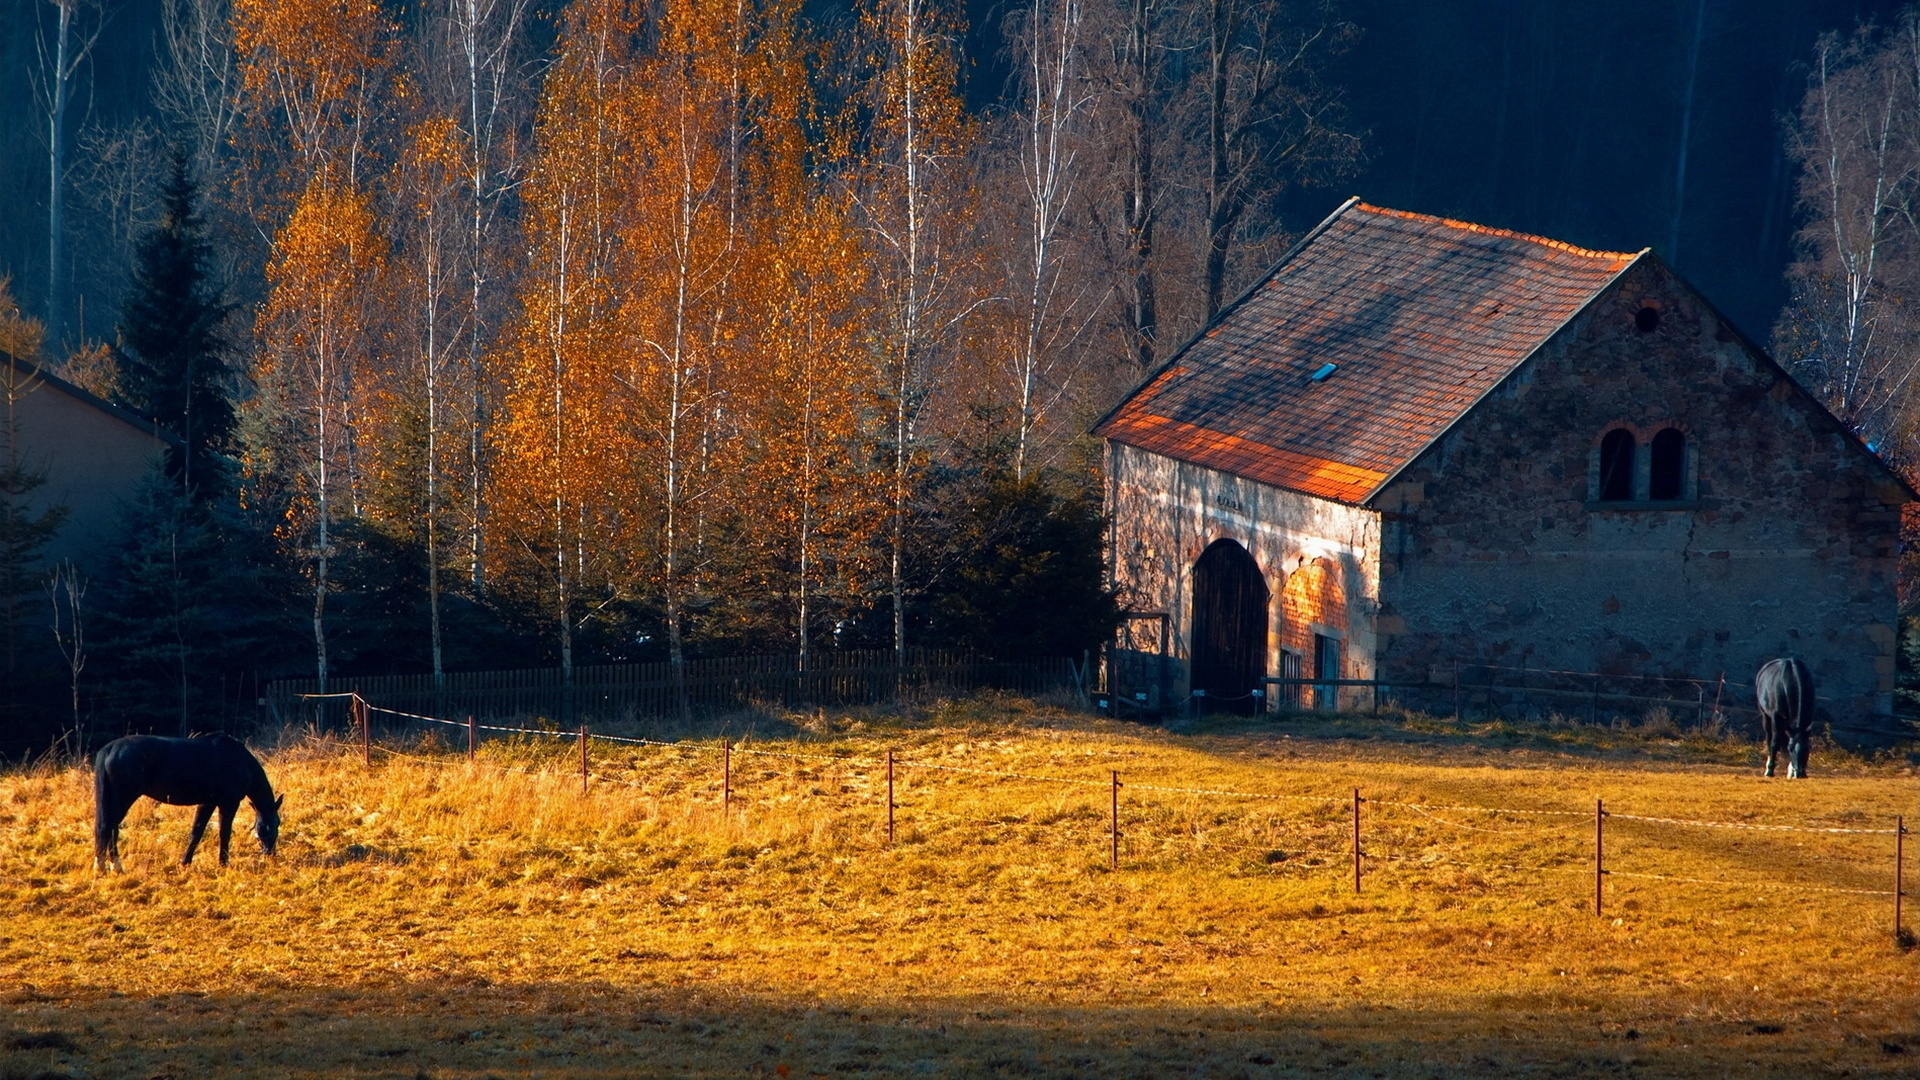 Horses rustic farm barn landscapes buildings autumn fall trees wallpaperx1080